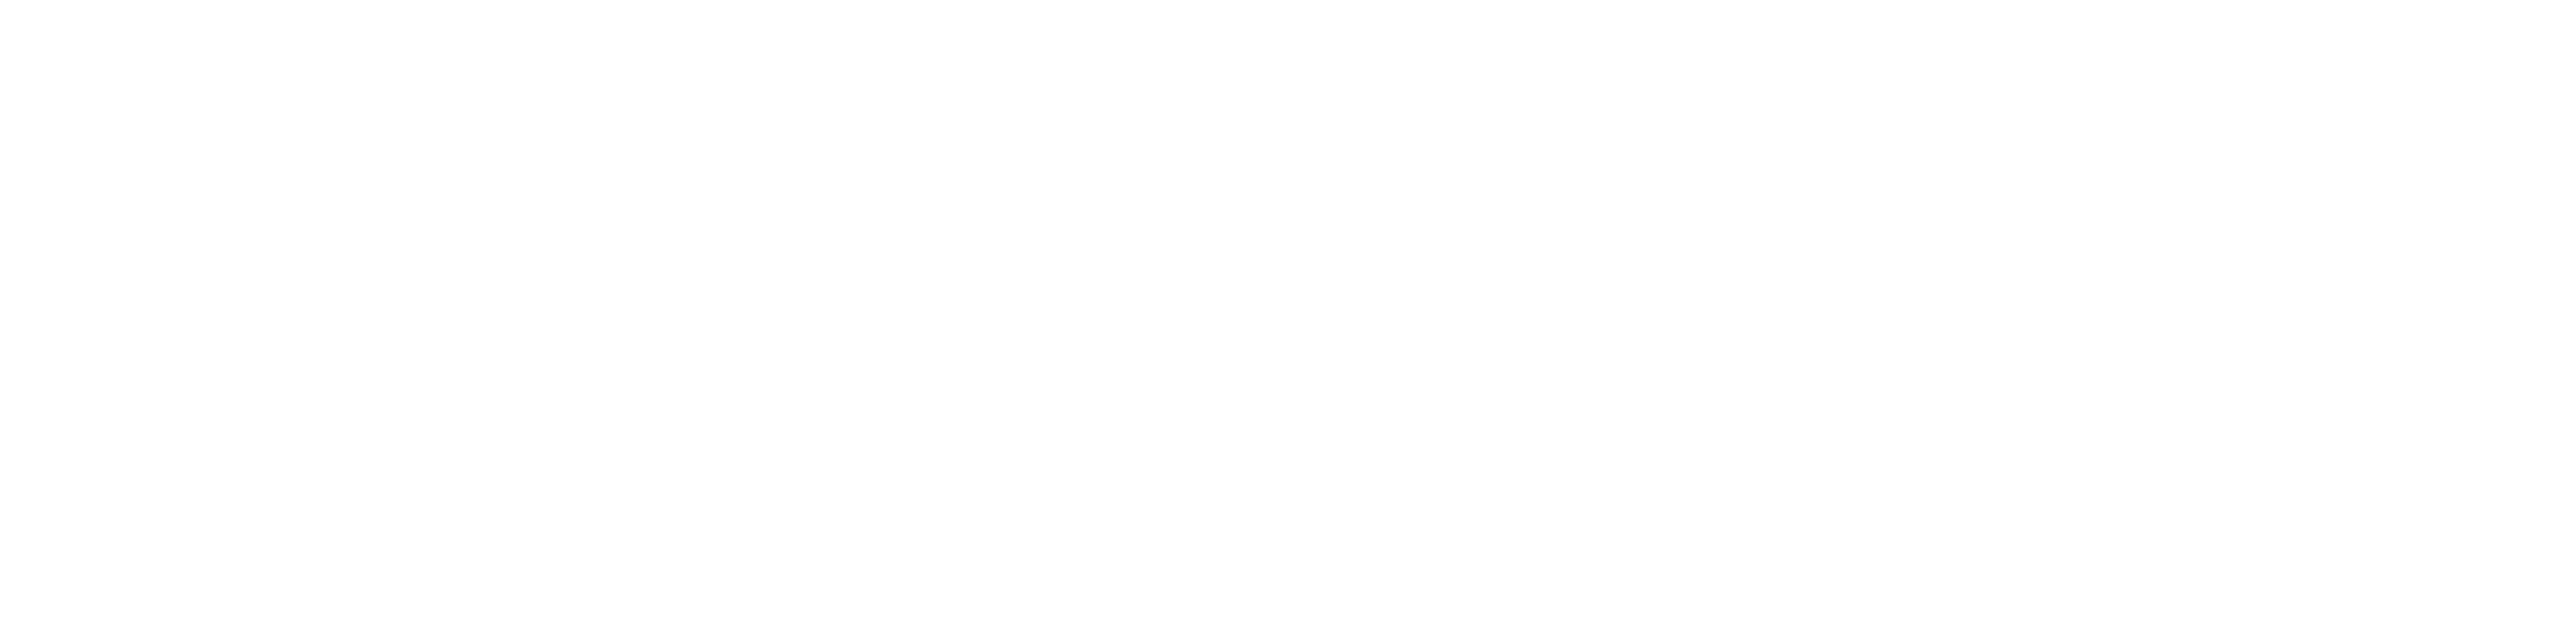 TietoEVRY logo